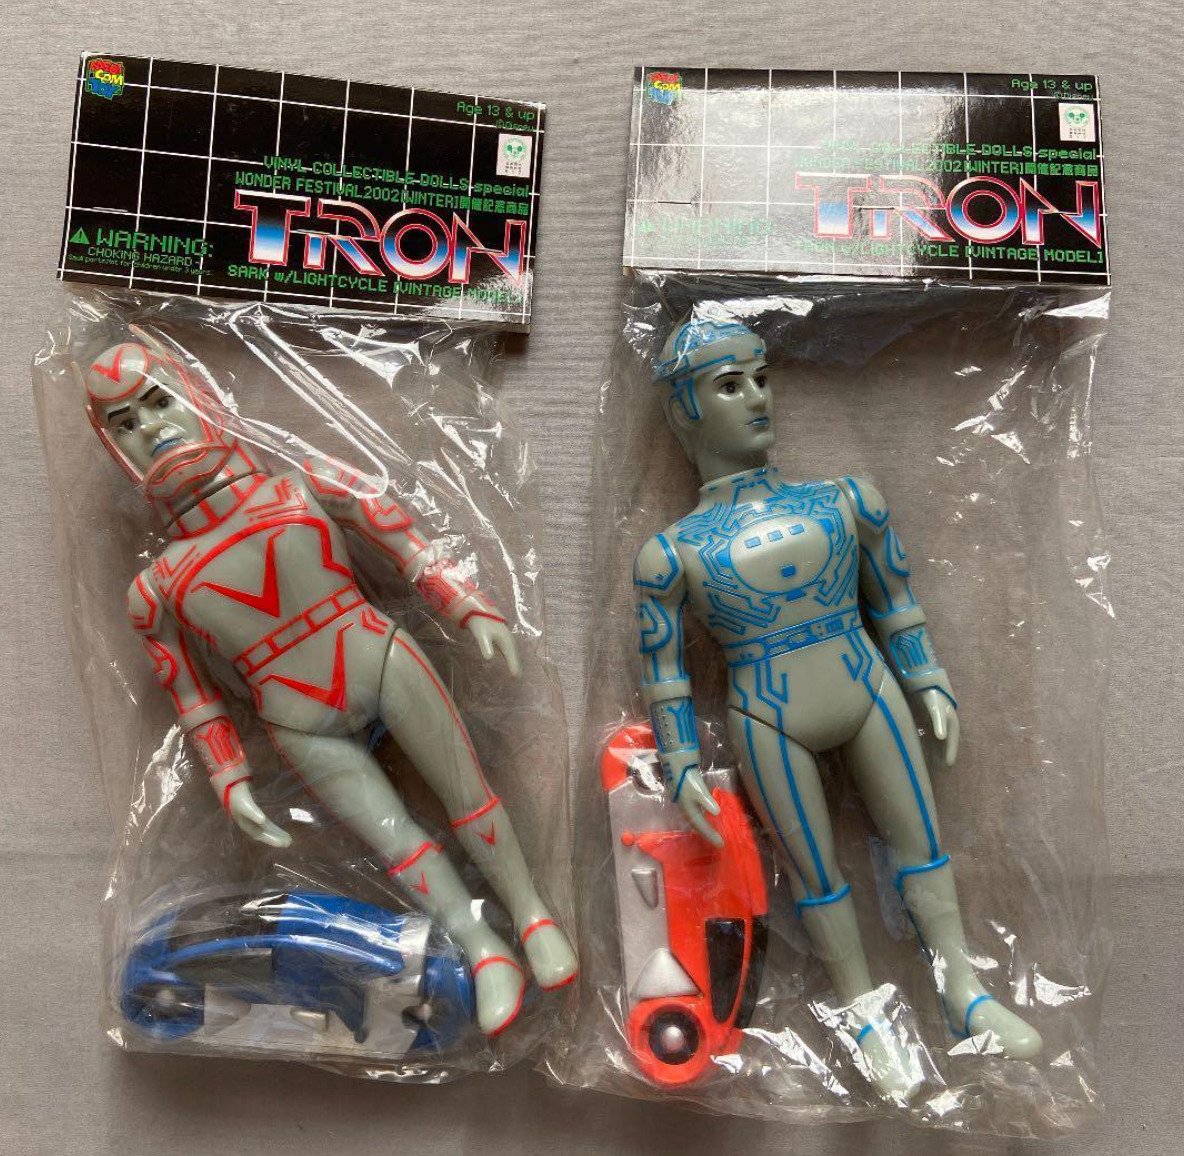 Movie Tron Soft Vinyl Figure Wonder Festival Limited 2 Types Medicom Toy